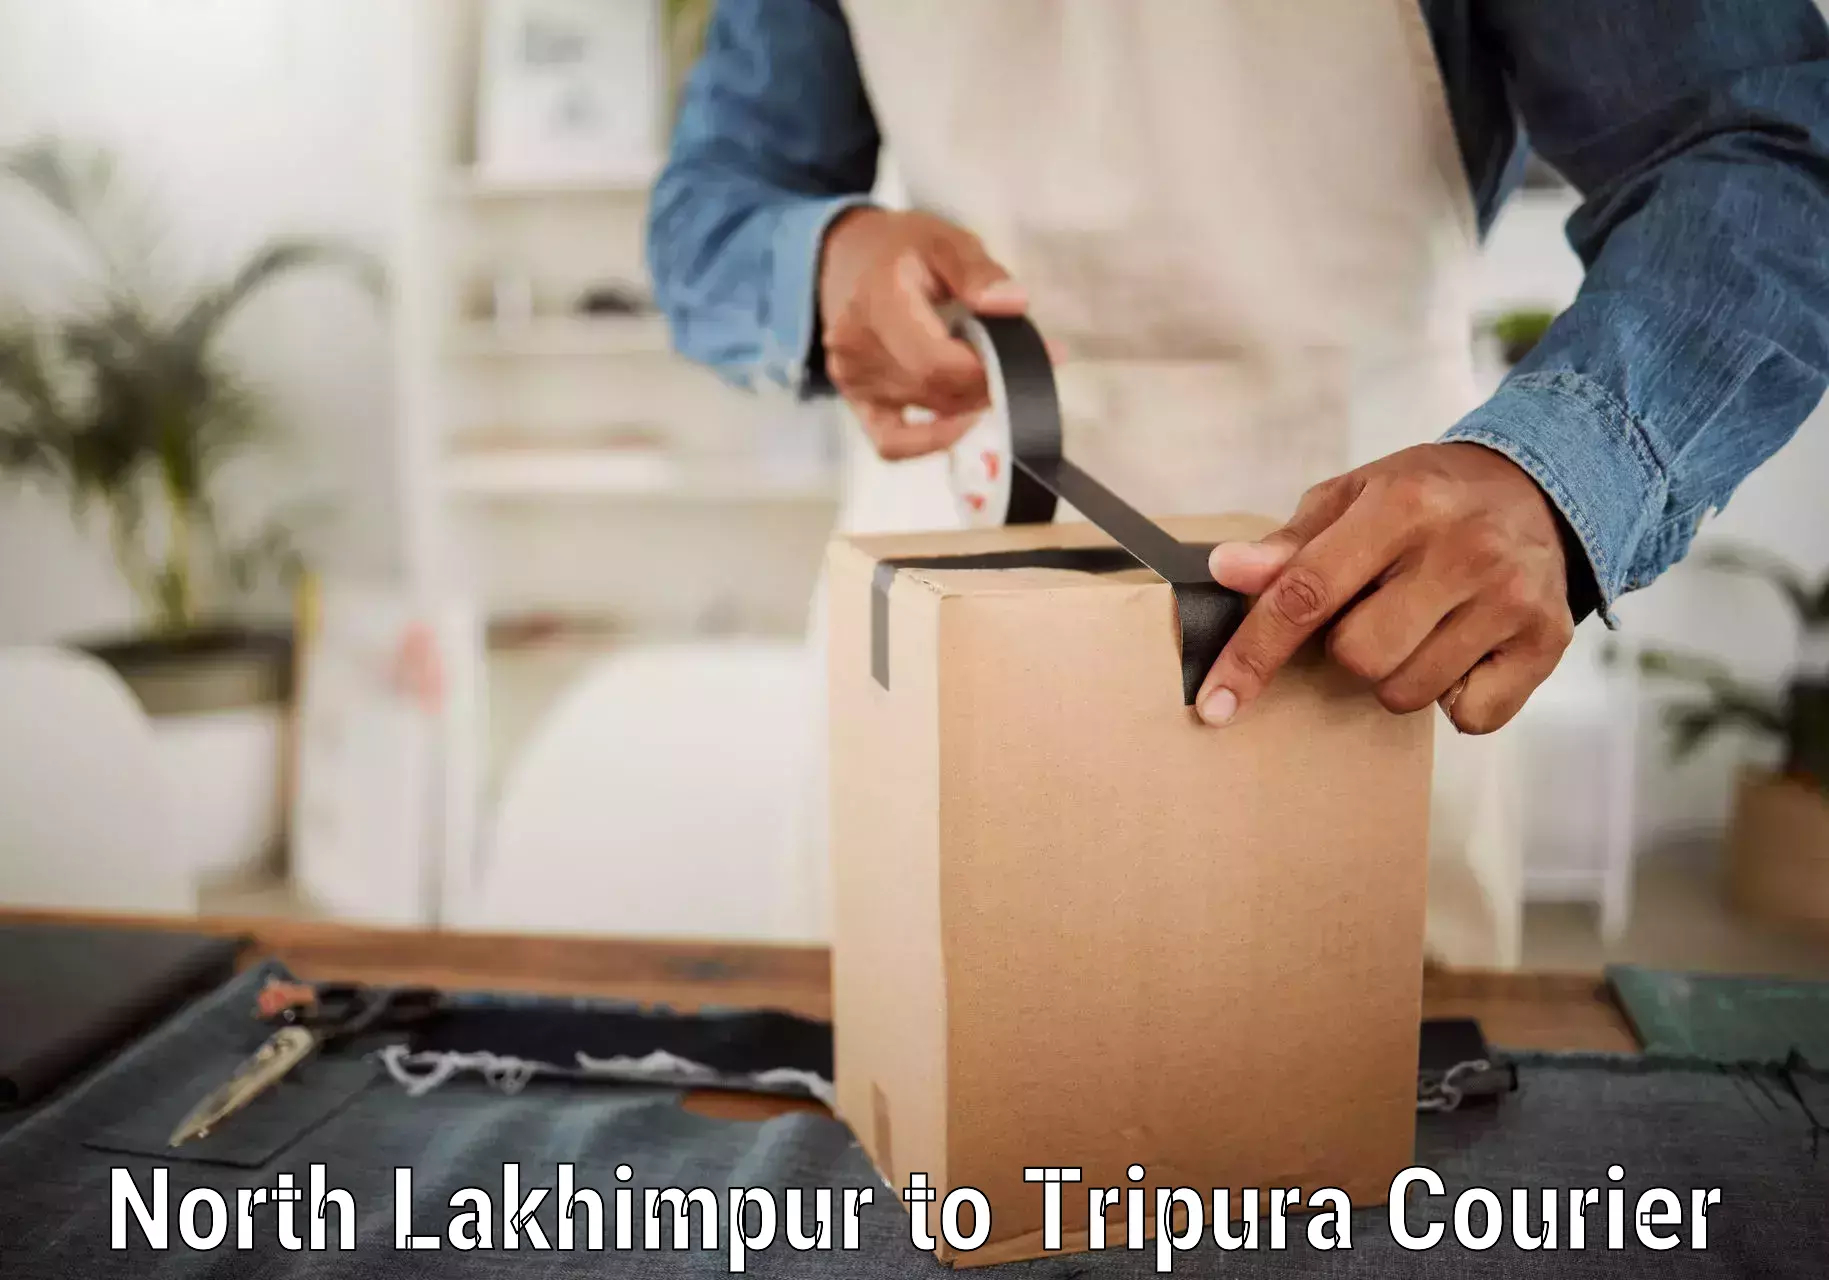 Efficient order fulfillment in North Lakhimpur to Amarpur